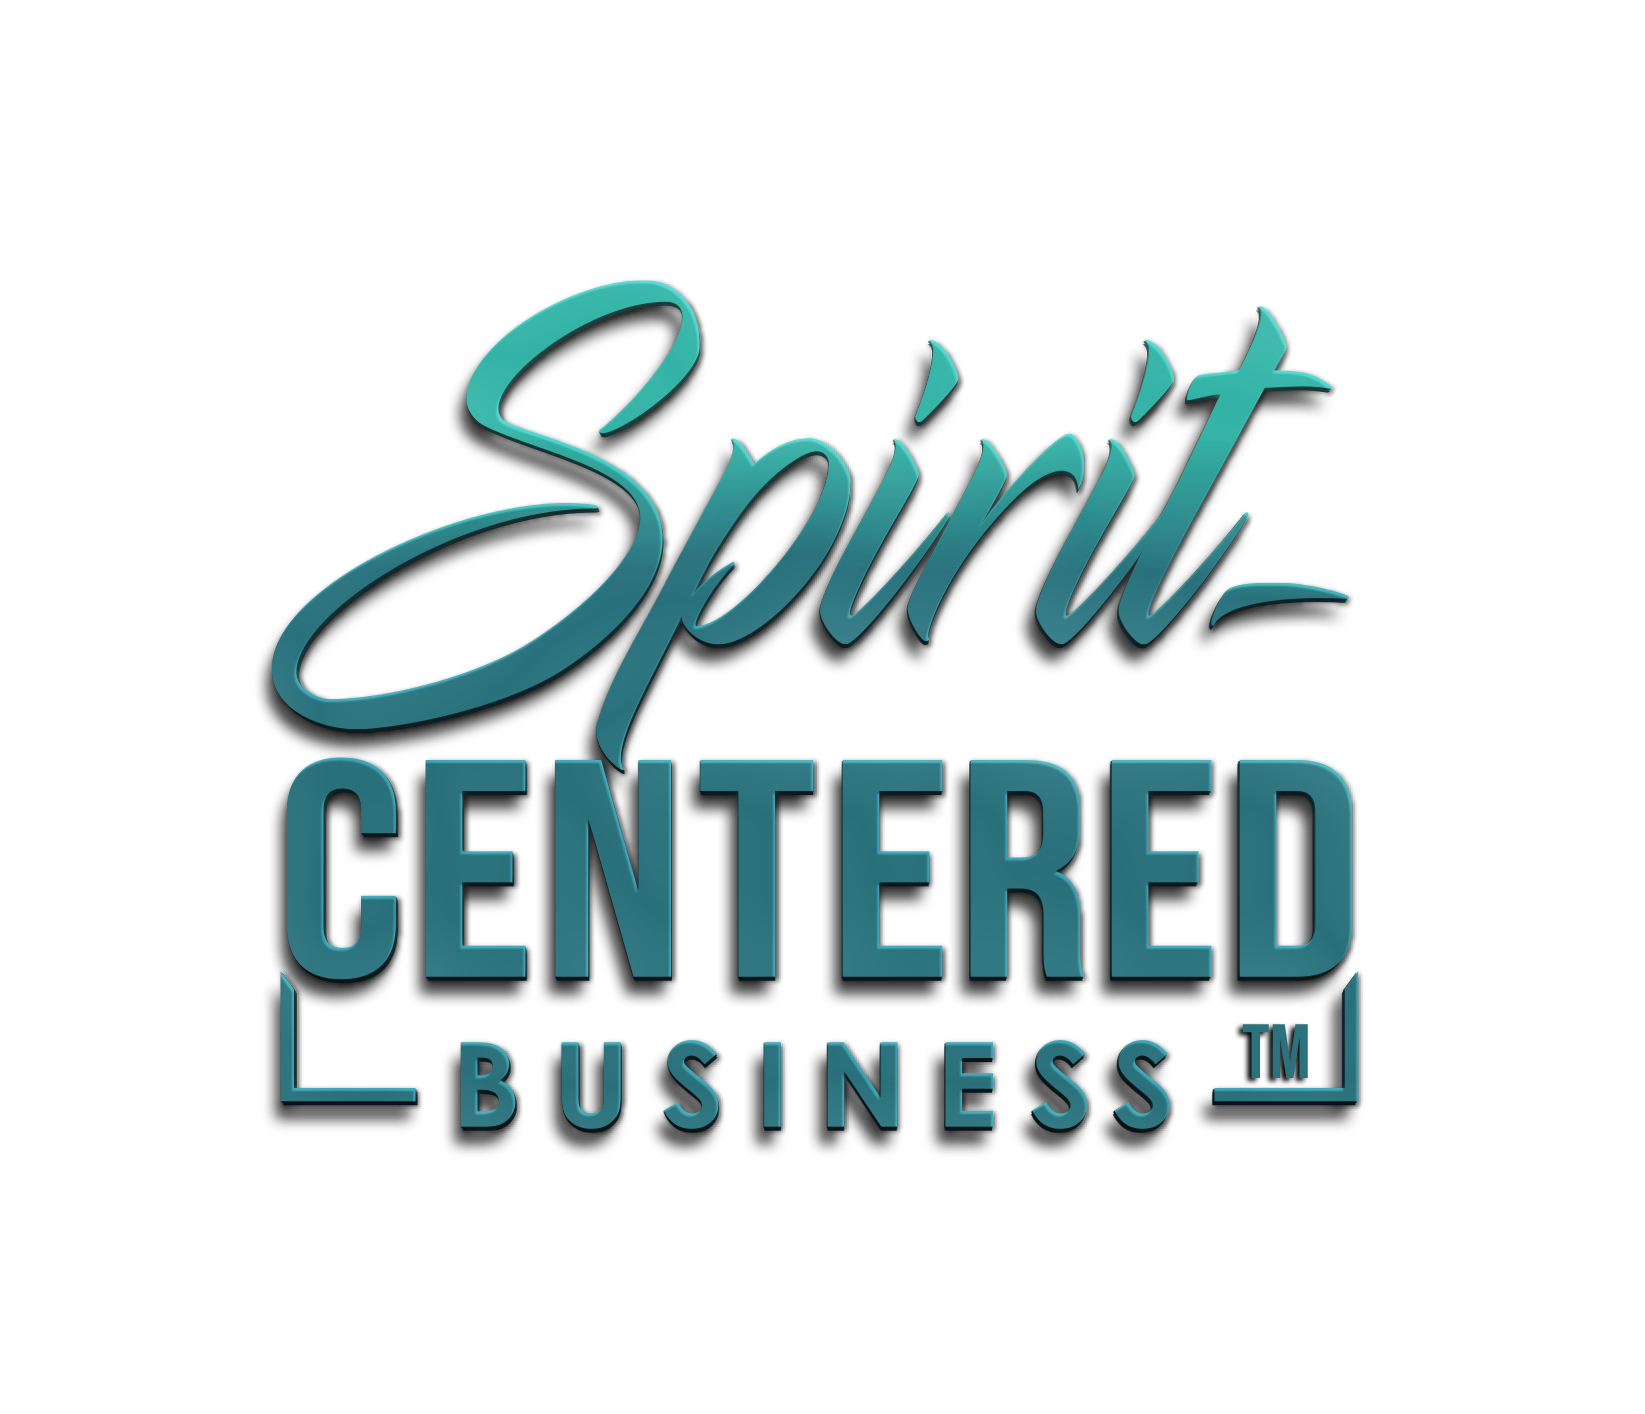 Spirit-Centered Business